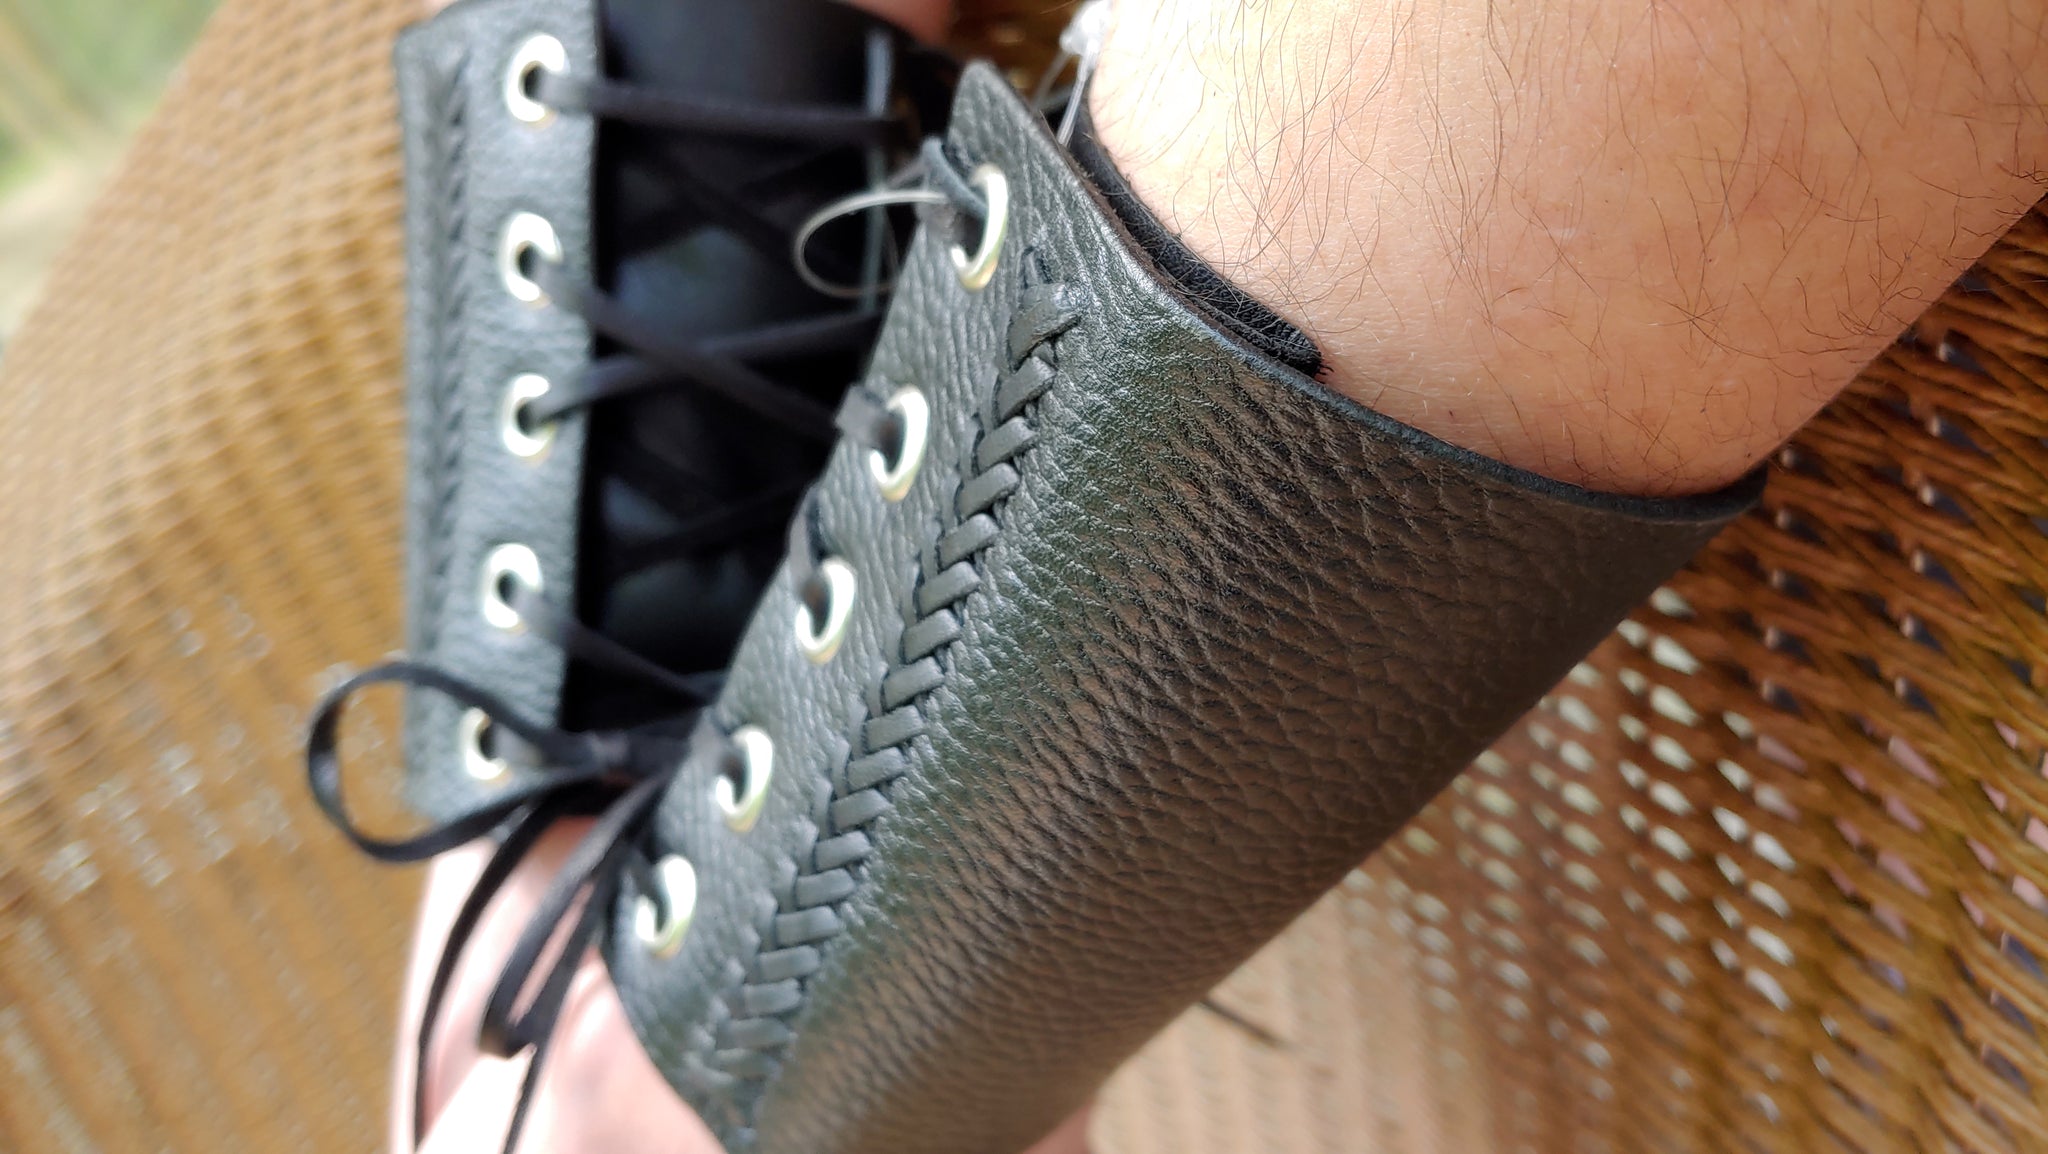 JAJA Corset Style Braided Leather Cuff Bracelet - one